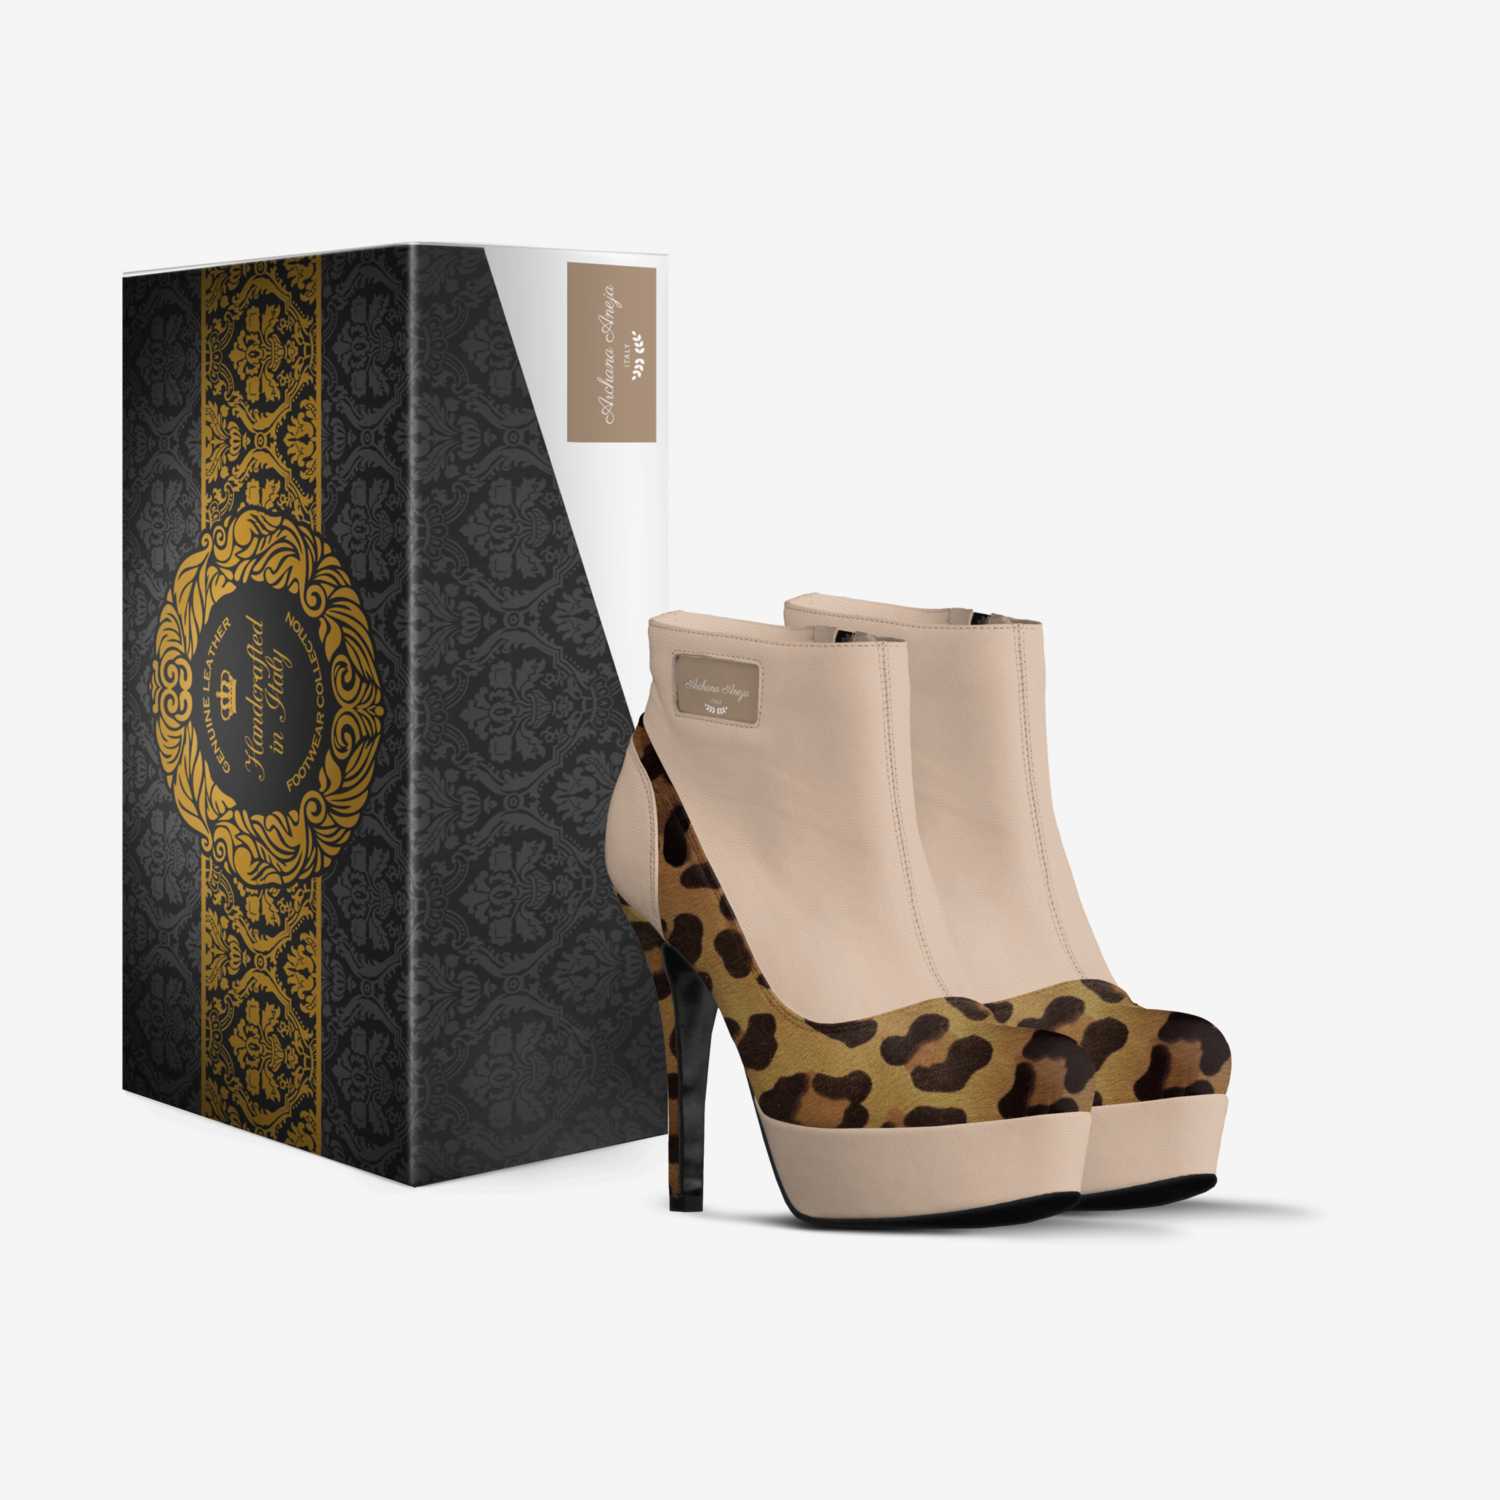 Archana Aneja custom made in Italy shoes by Archana Aneja | Box view